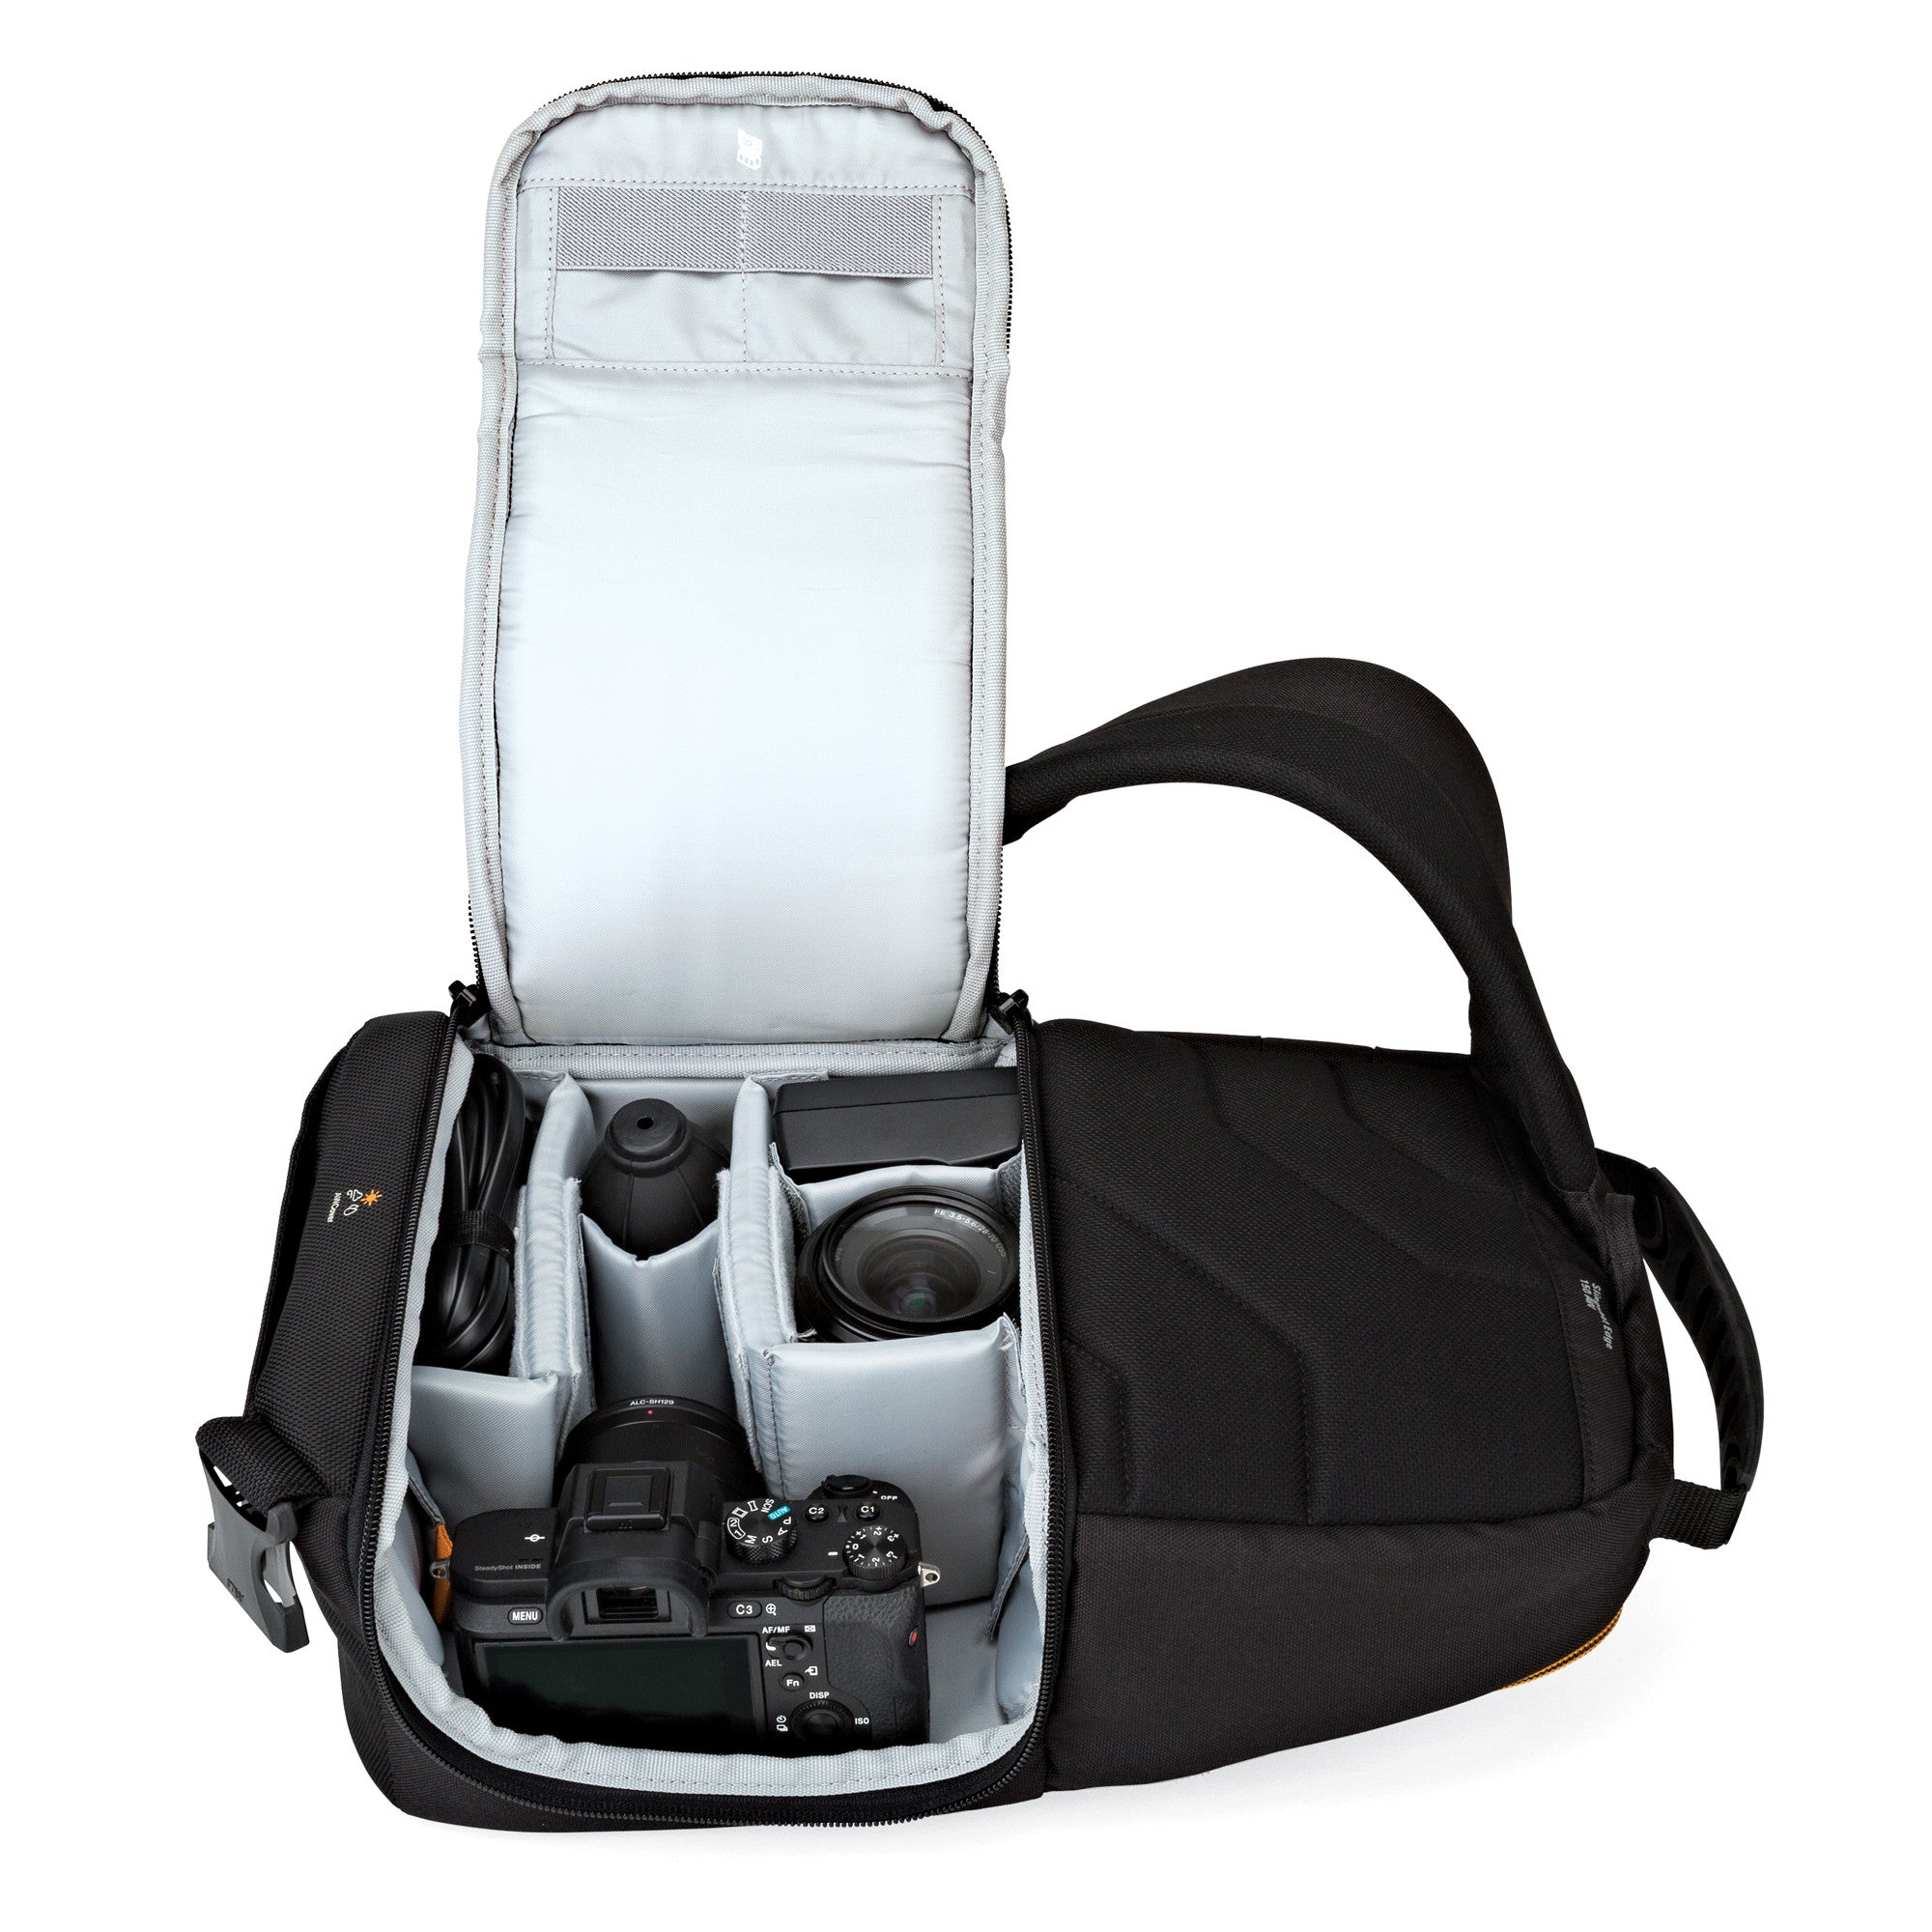 Lowepro Slingshot Edge 150 AW Camera Bag, bags sling / daypacks, Lowepro - Pictureline  - 2